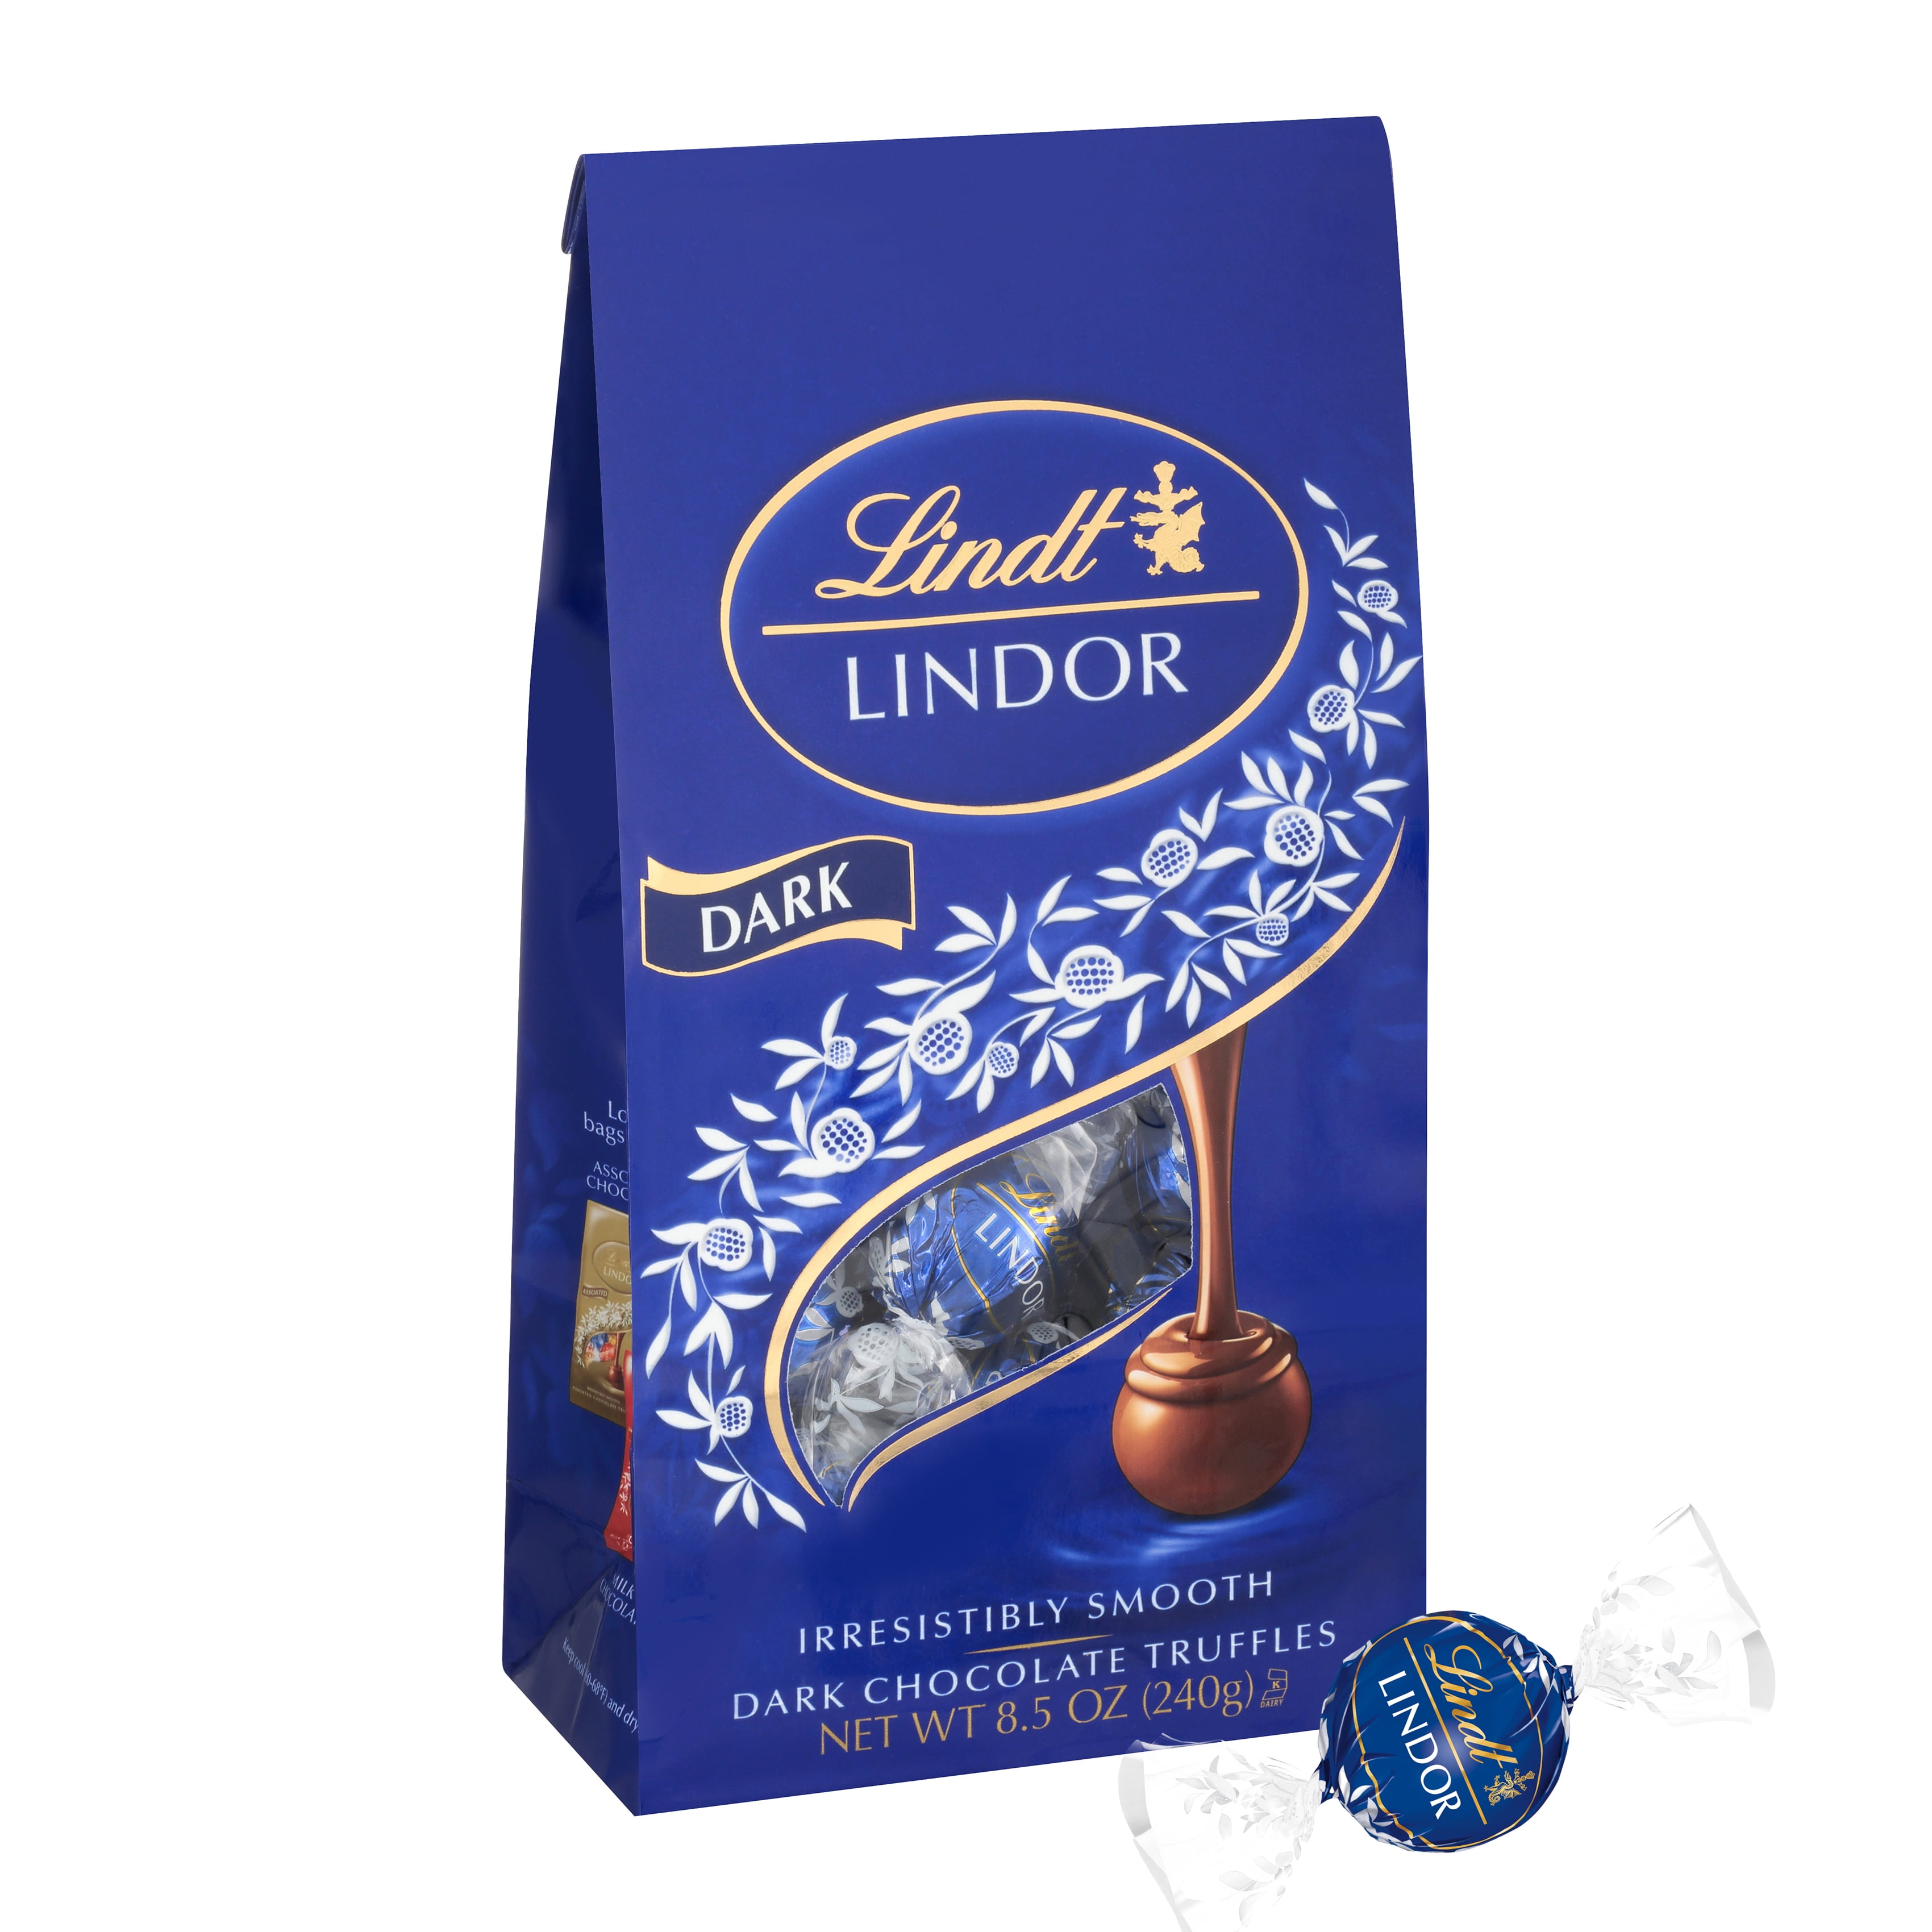 Lindt Lindor, Dark Chocolate Candy Truffles, Easter Chocolate, 8.5 oz. Bag